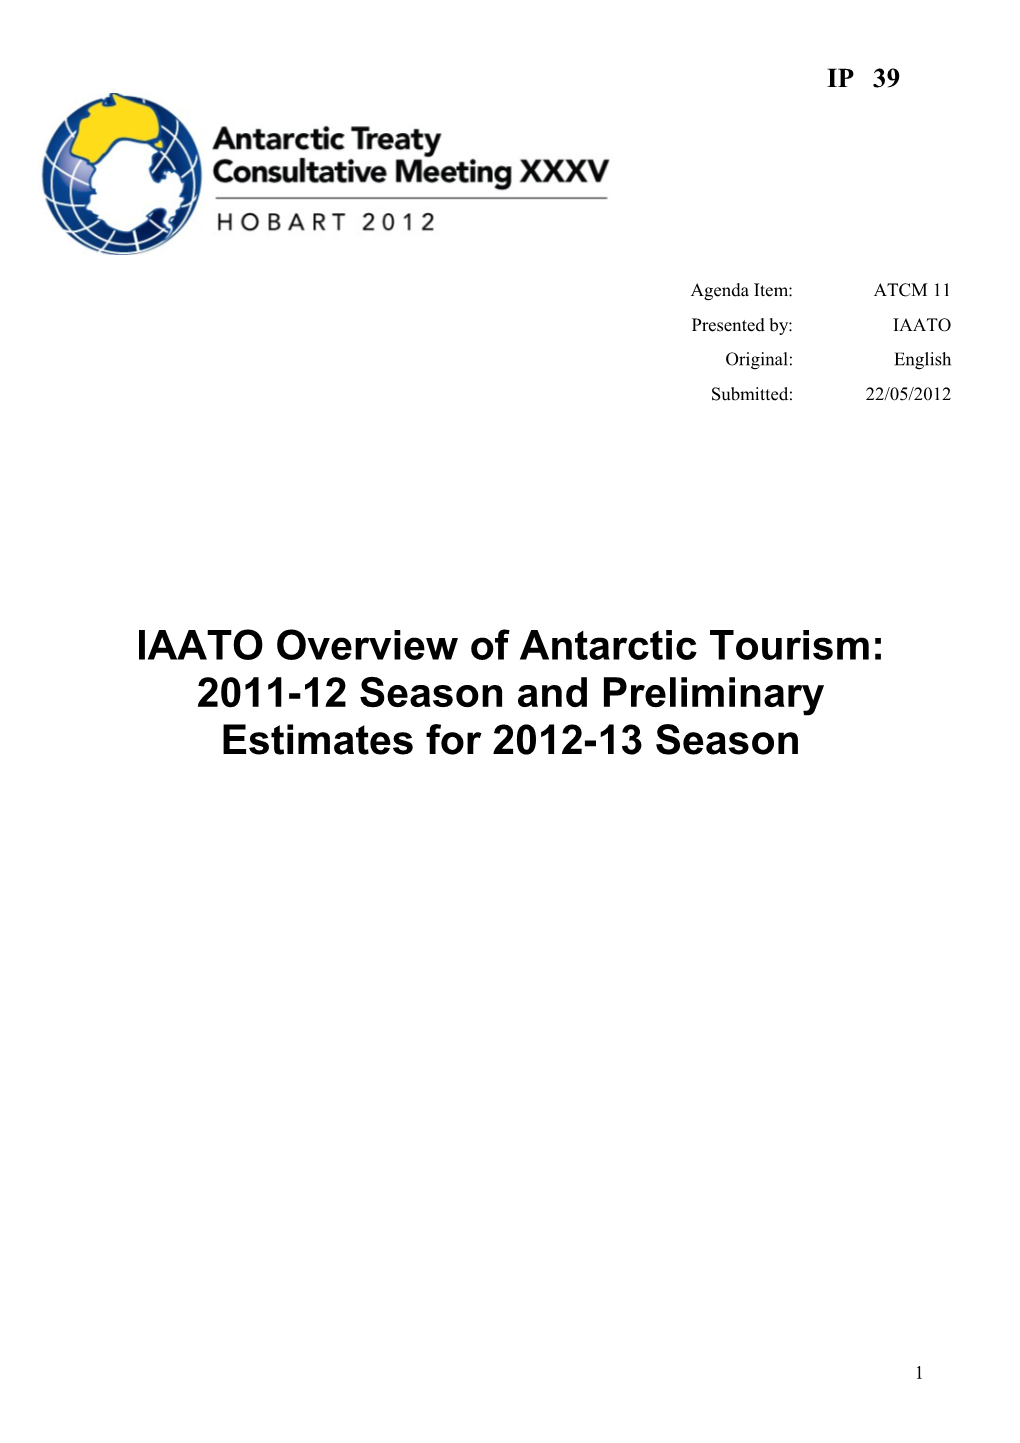 IAATO Overview of Antarctic Tourism: 2011-12 Season and Preliminary Estimates for 2012-13